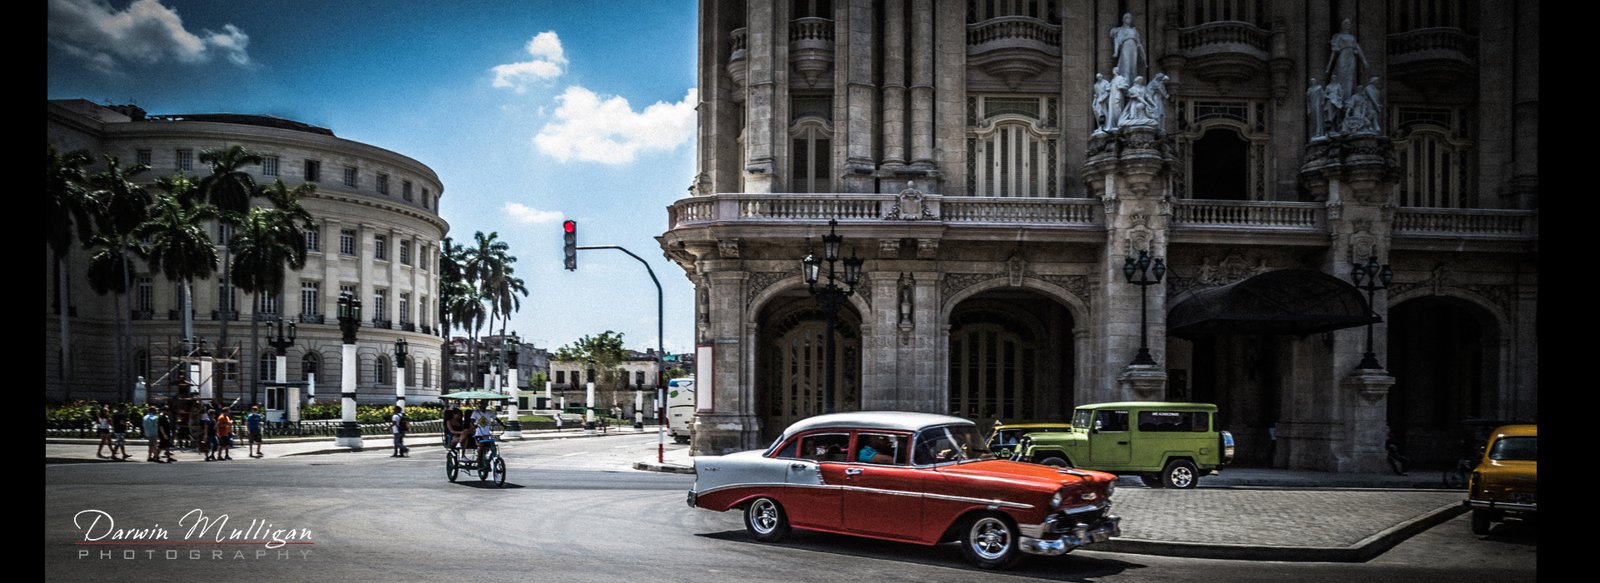 Old-1950-era-Chevy-Bel-Air-old-town-Havana-Cuba